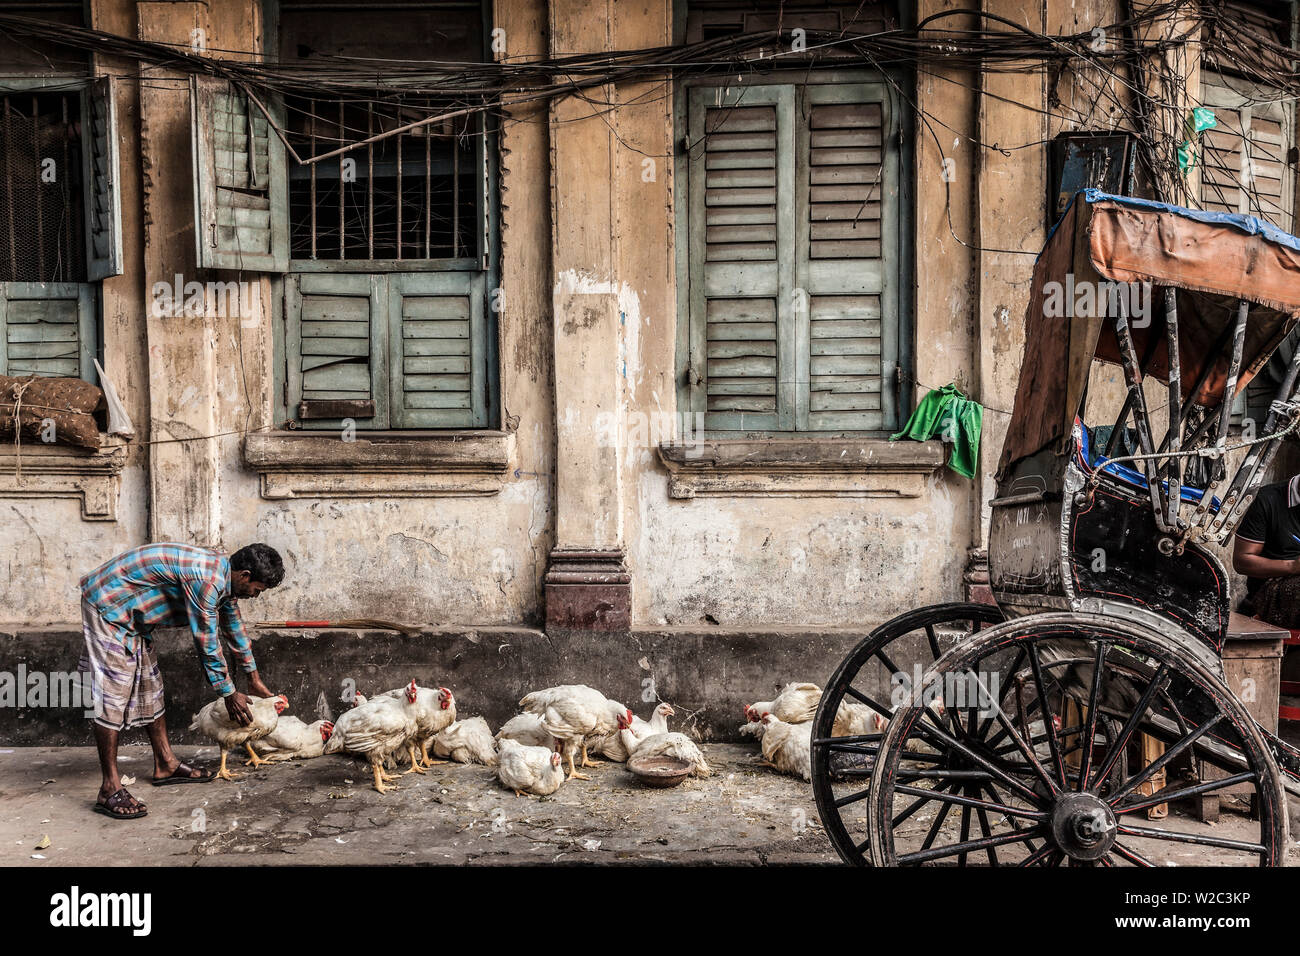 Chickens & rickshaw on street, Kolkata (Calcutta), West Bengal, India Stock Photo